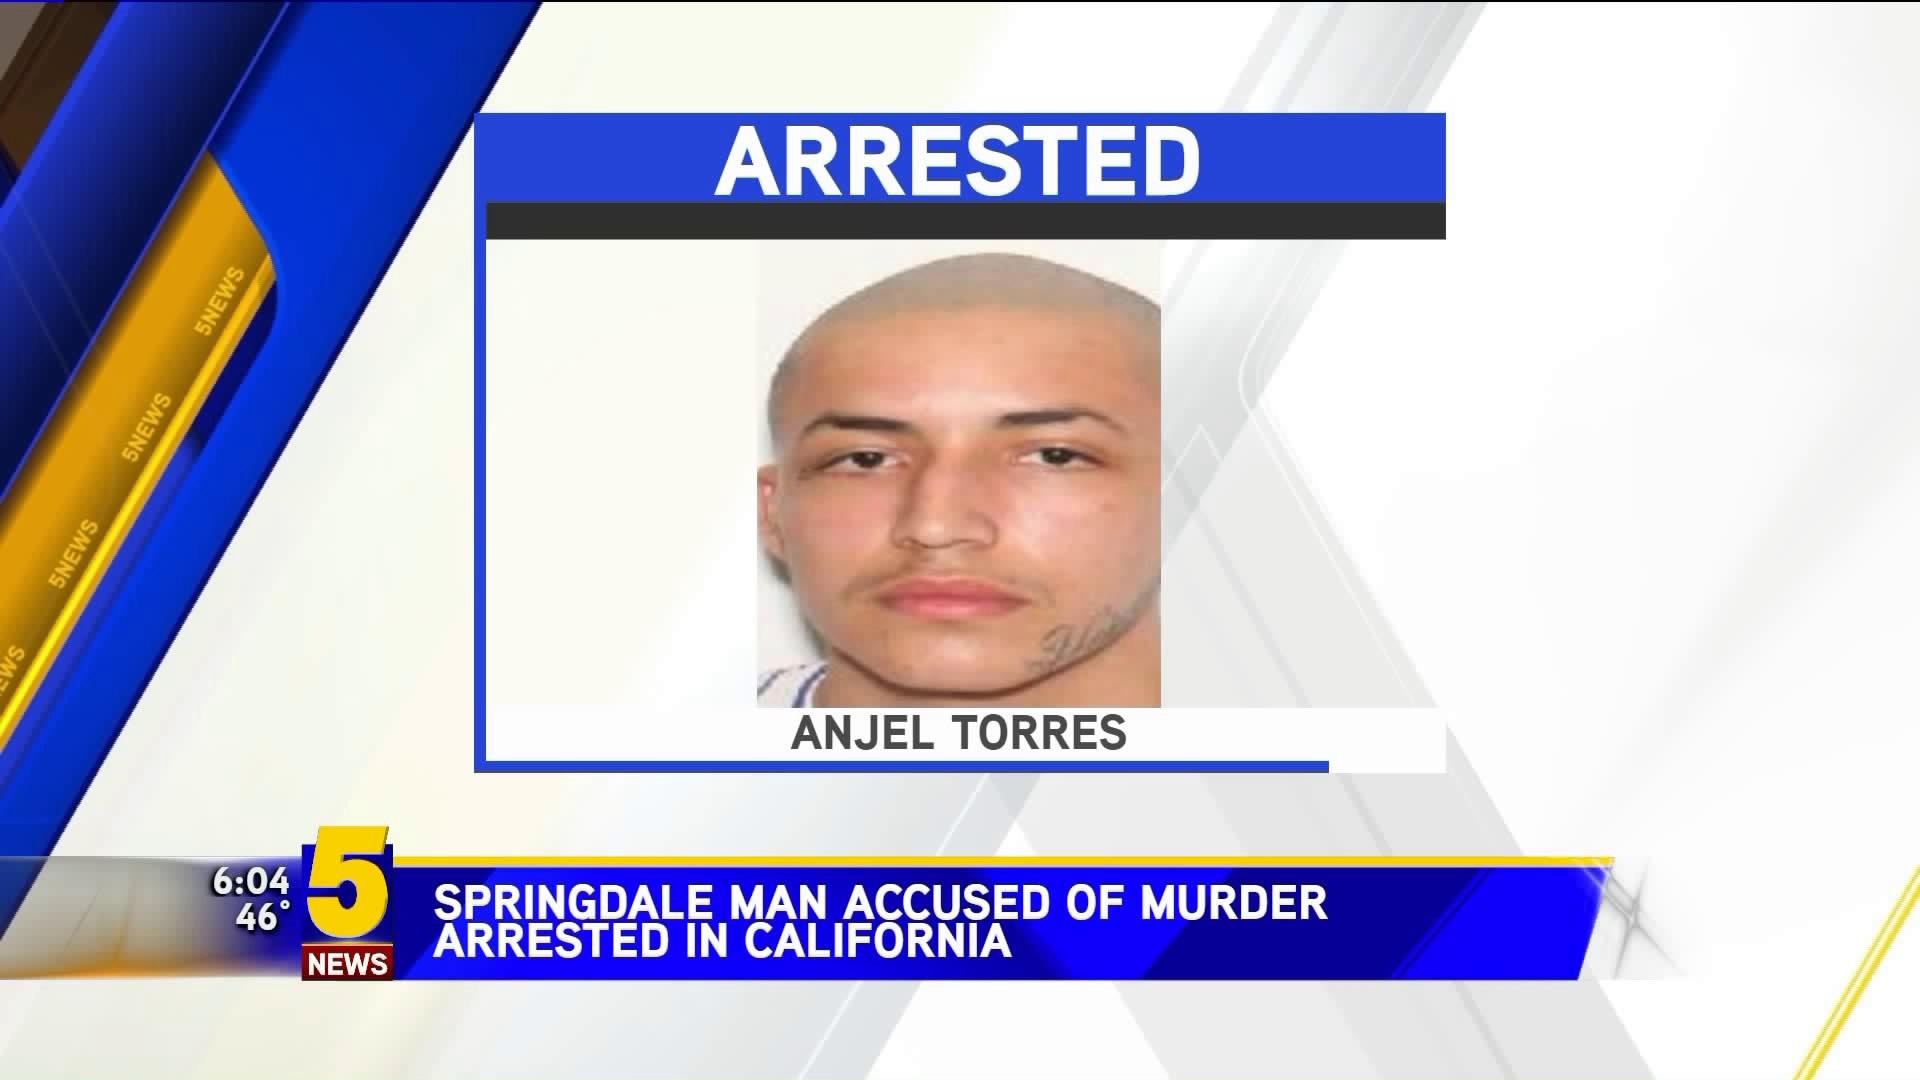 Springdale Man Accused Of Murder Arrested In California